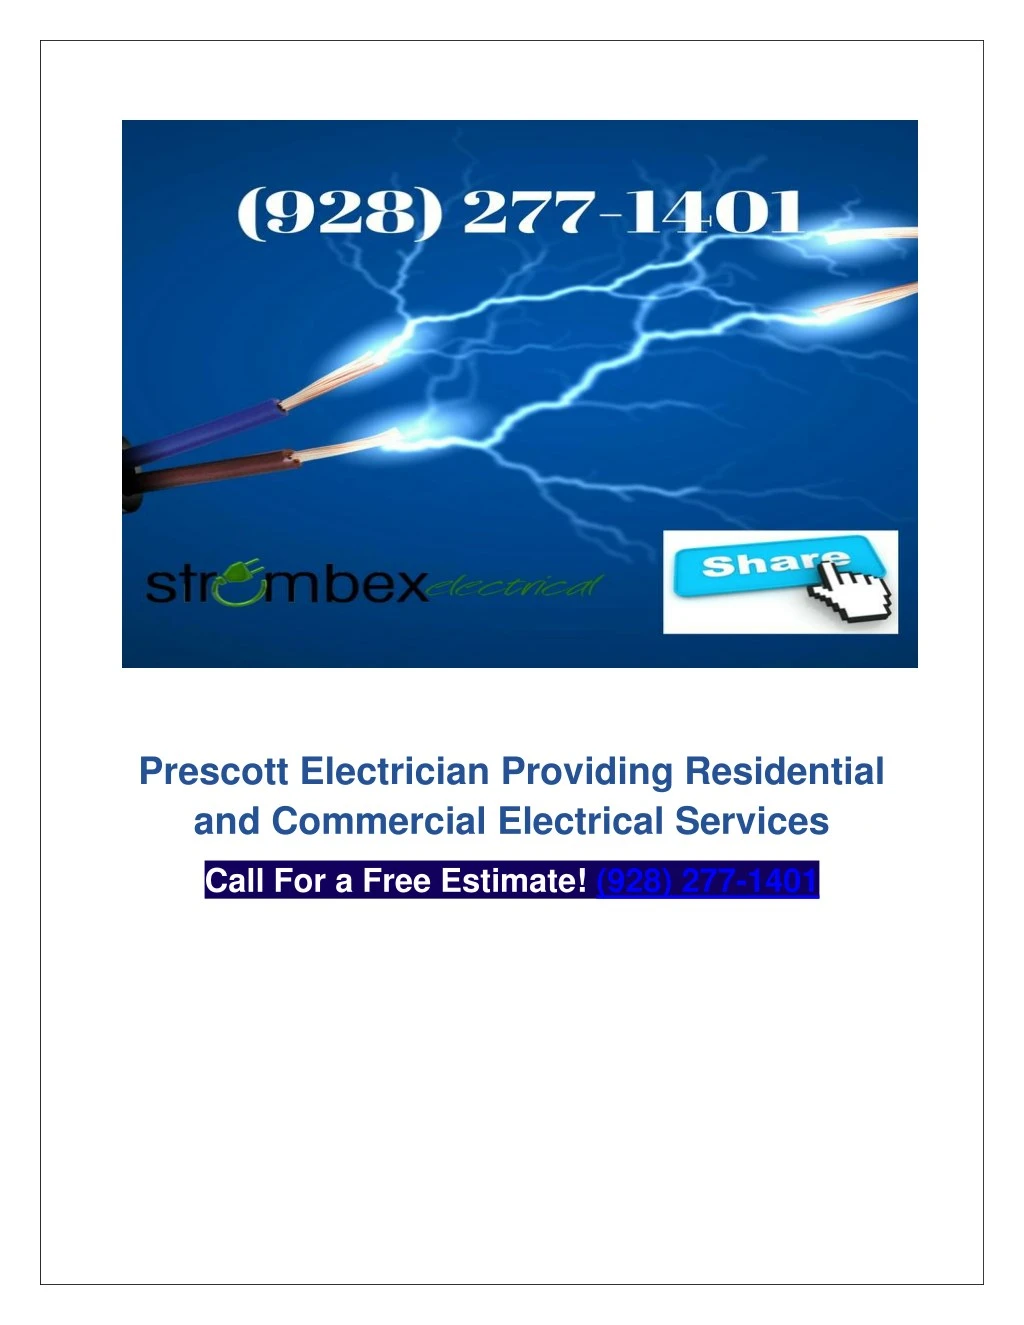 prescott electrician providing residential